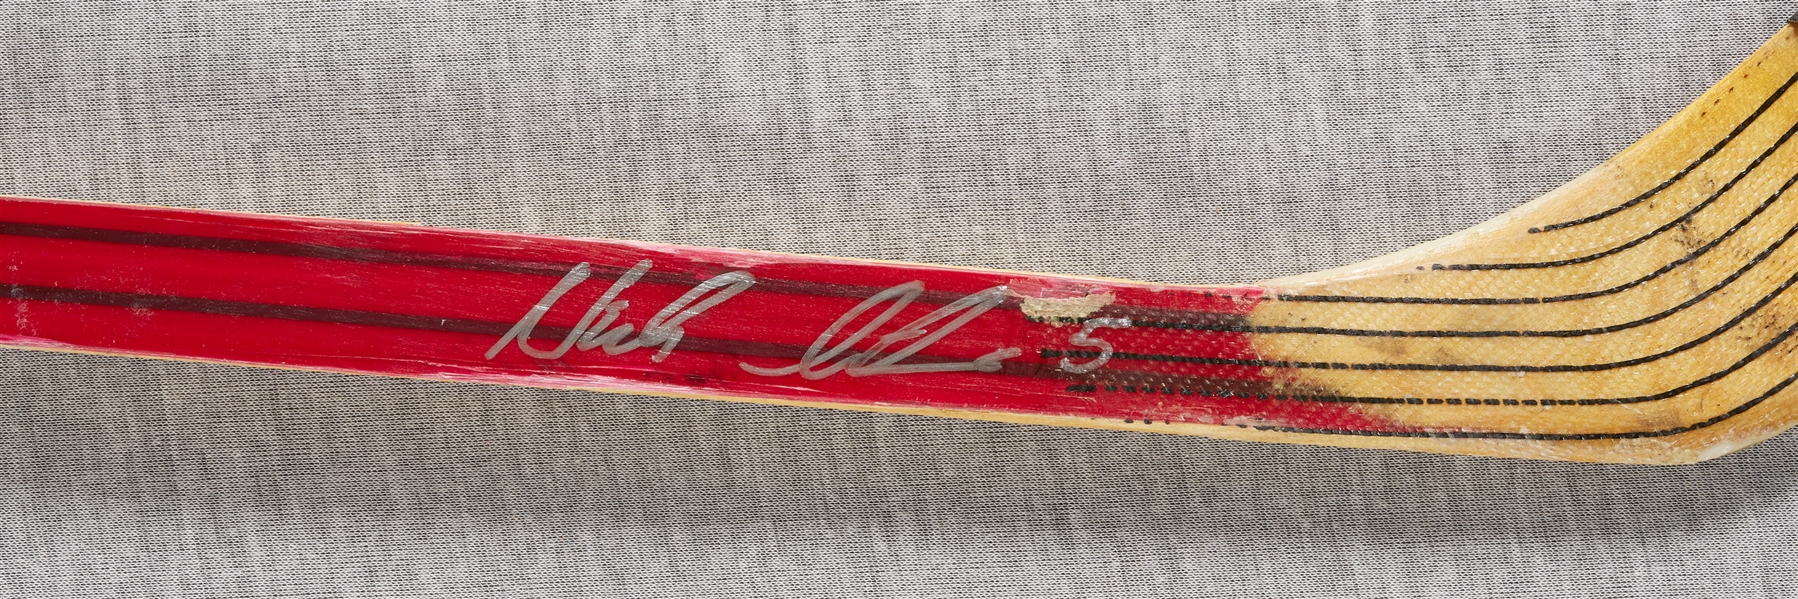 Nicklas Lidstrom Signed & Game-Used Montreal Hockey Stick (JSA)